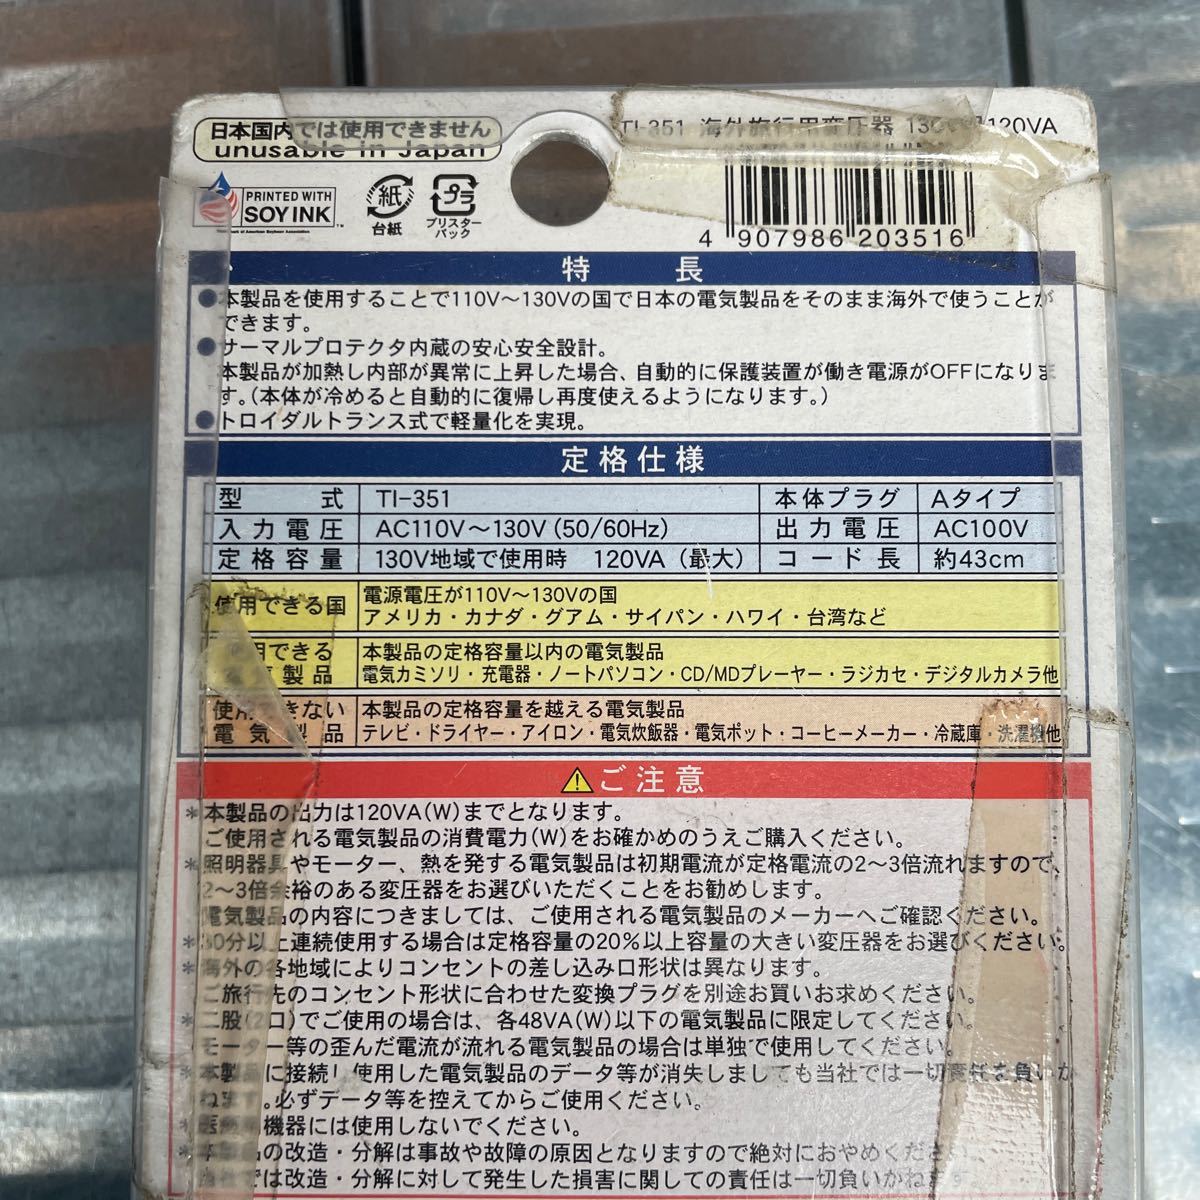 カシムラ 海外旅行用変圧器 130V用 120w 形式 TI-351 未使用_画像3